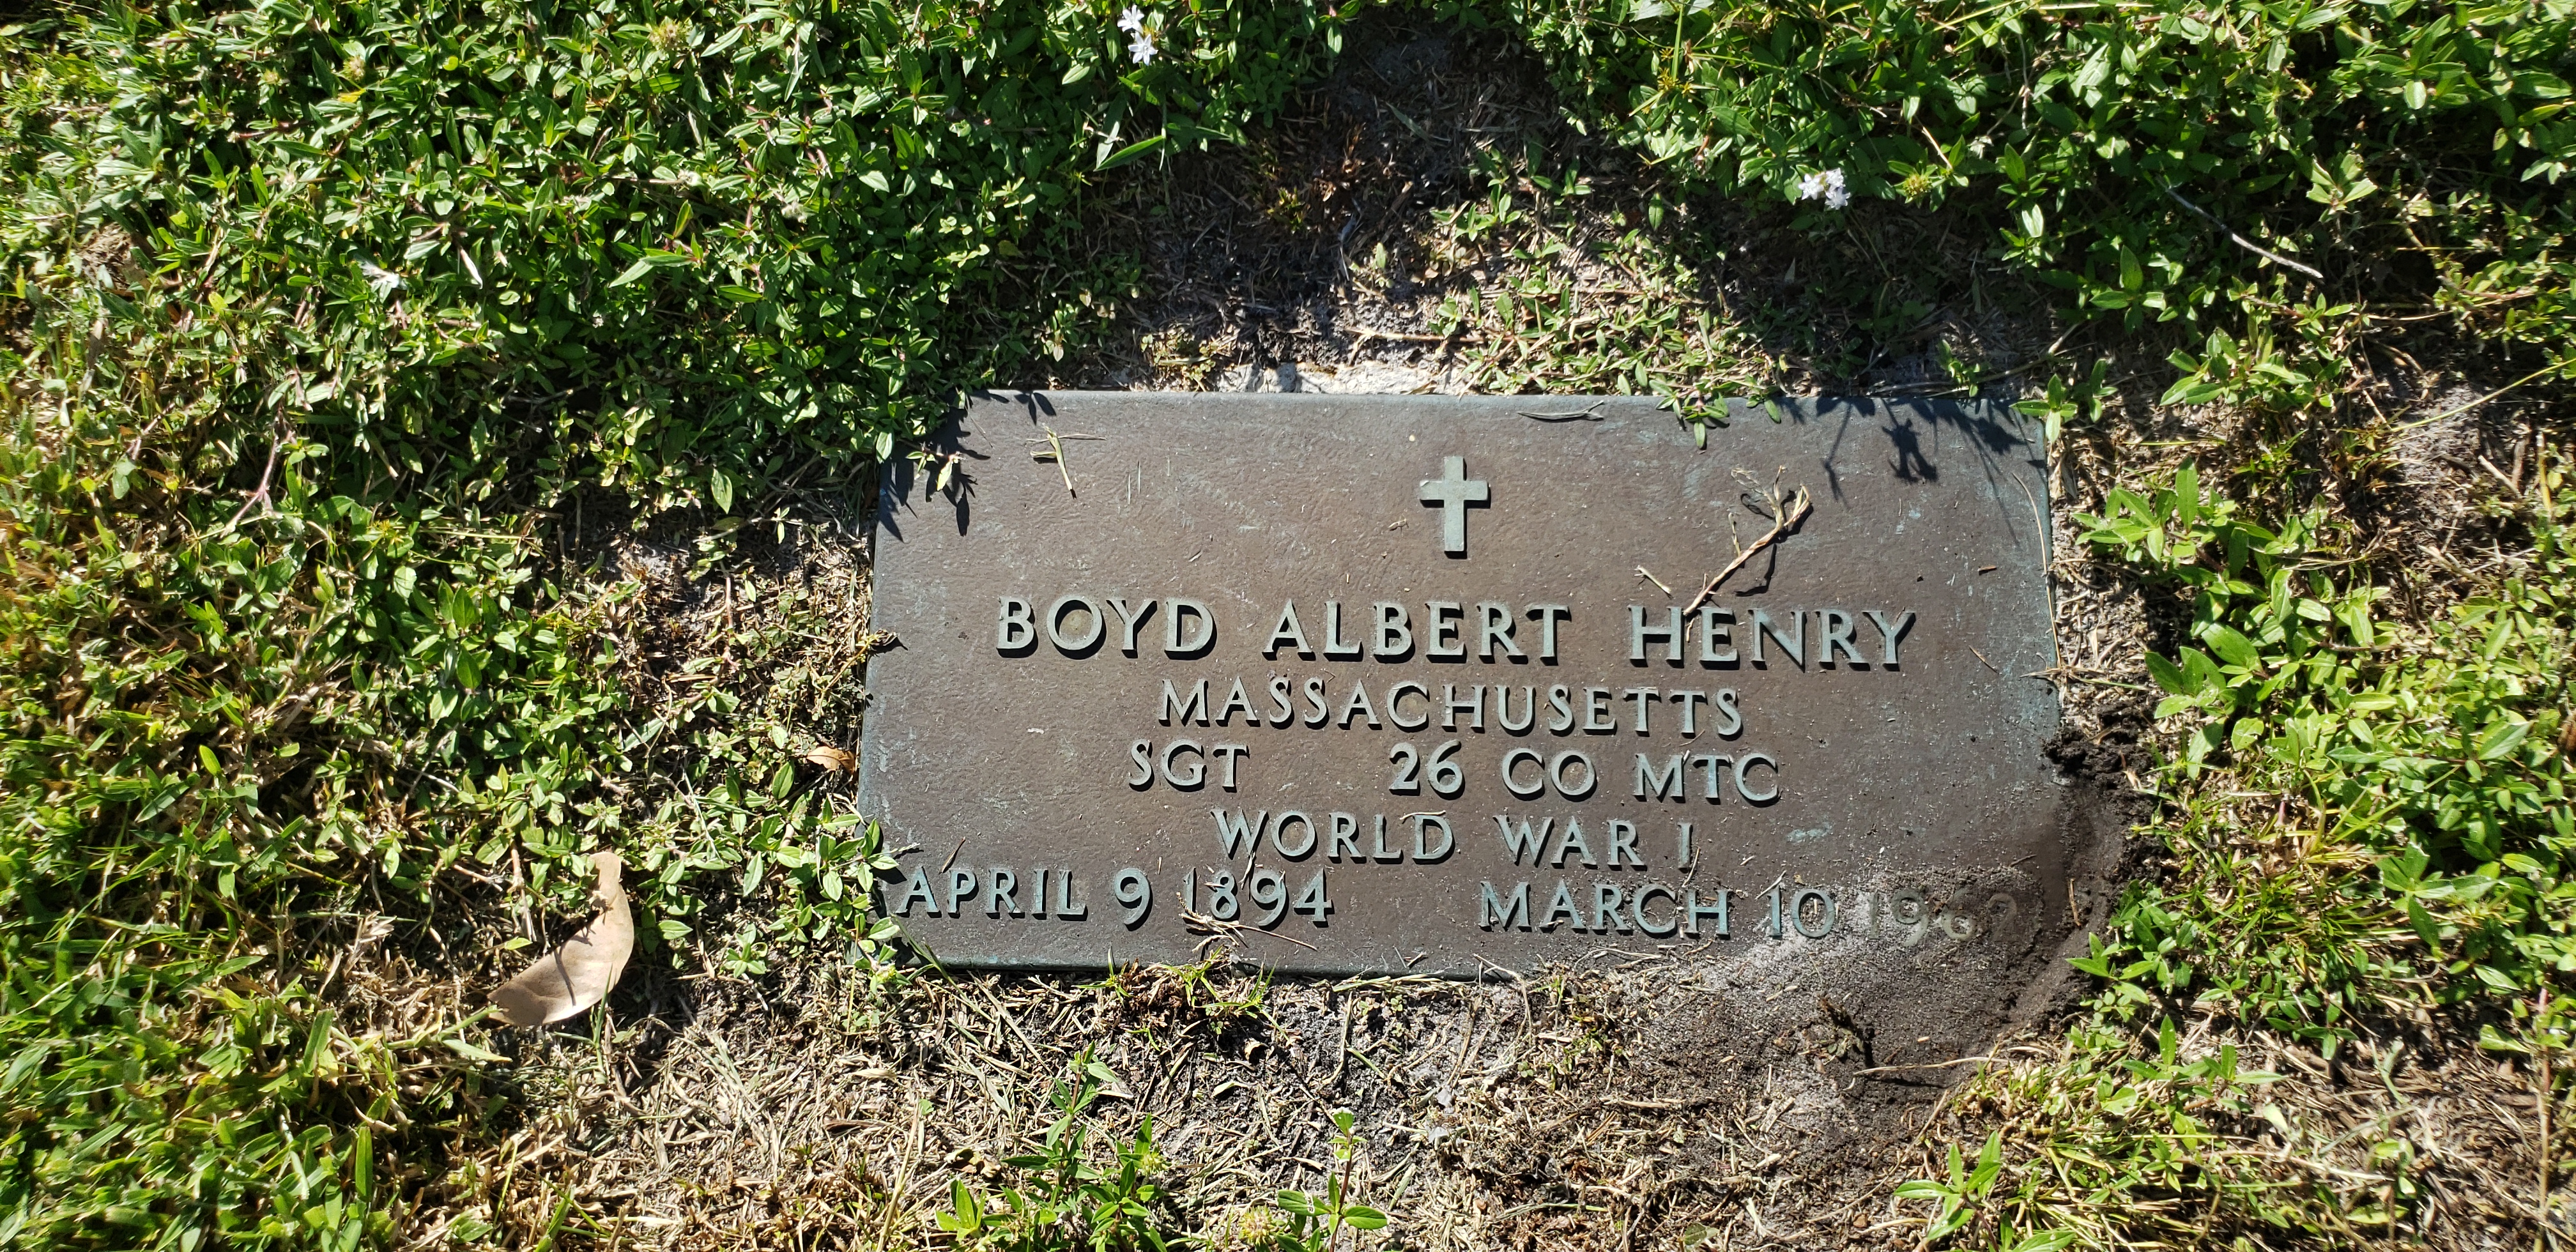 Boyd Albert Henry